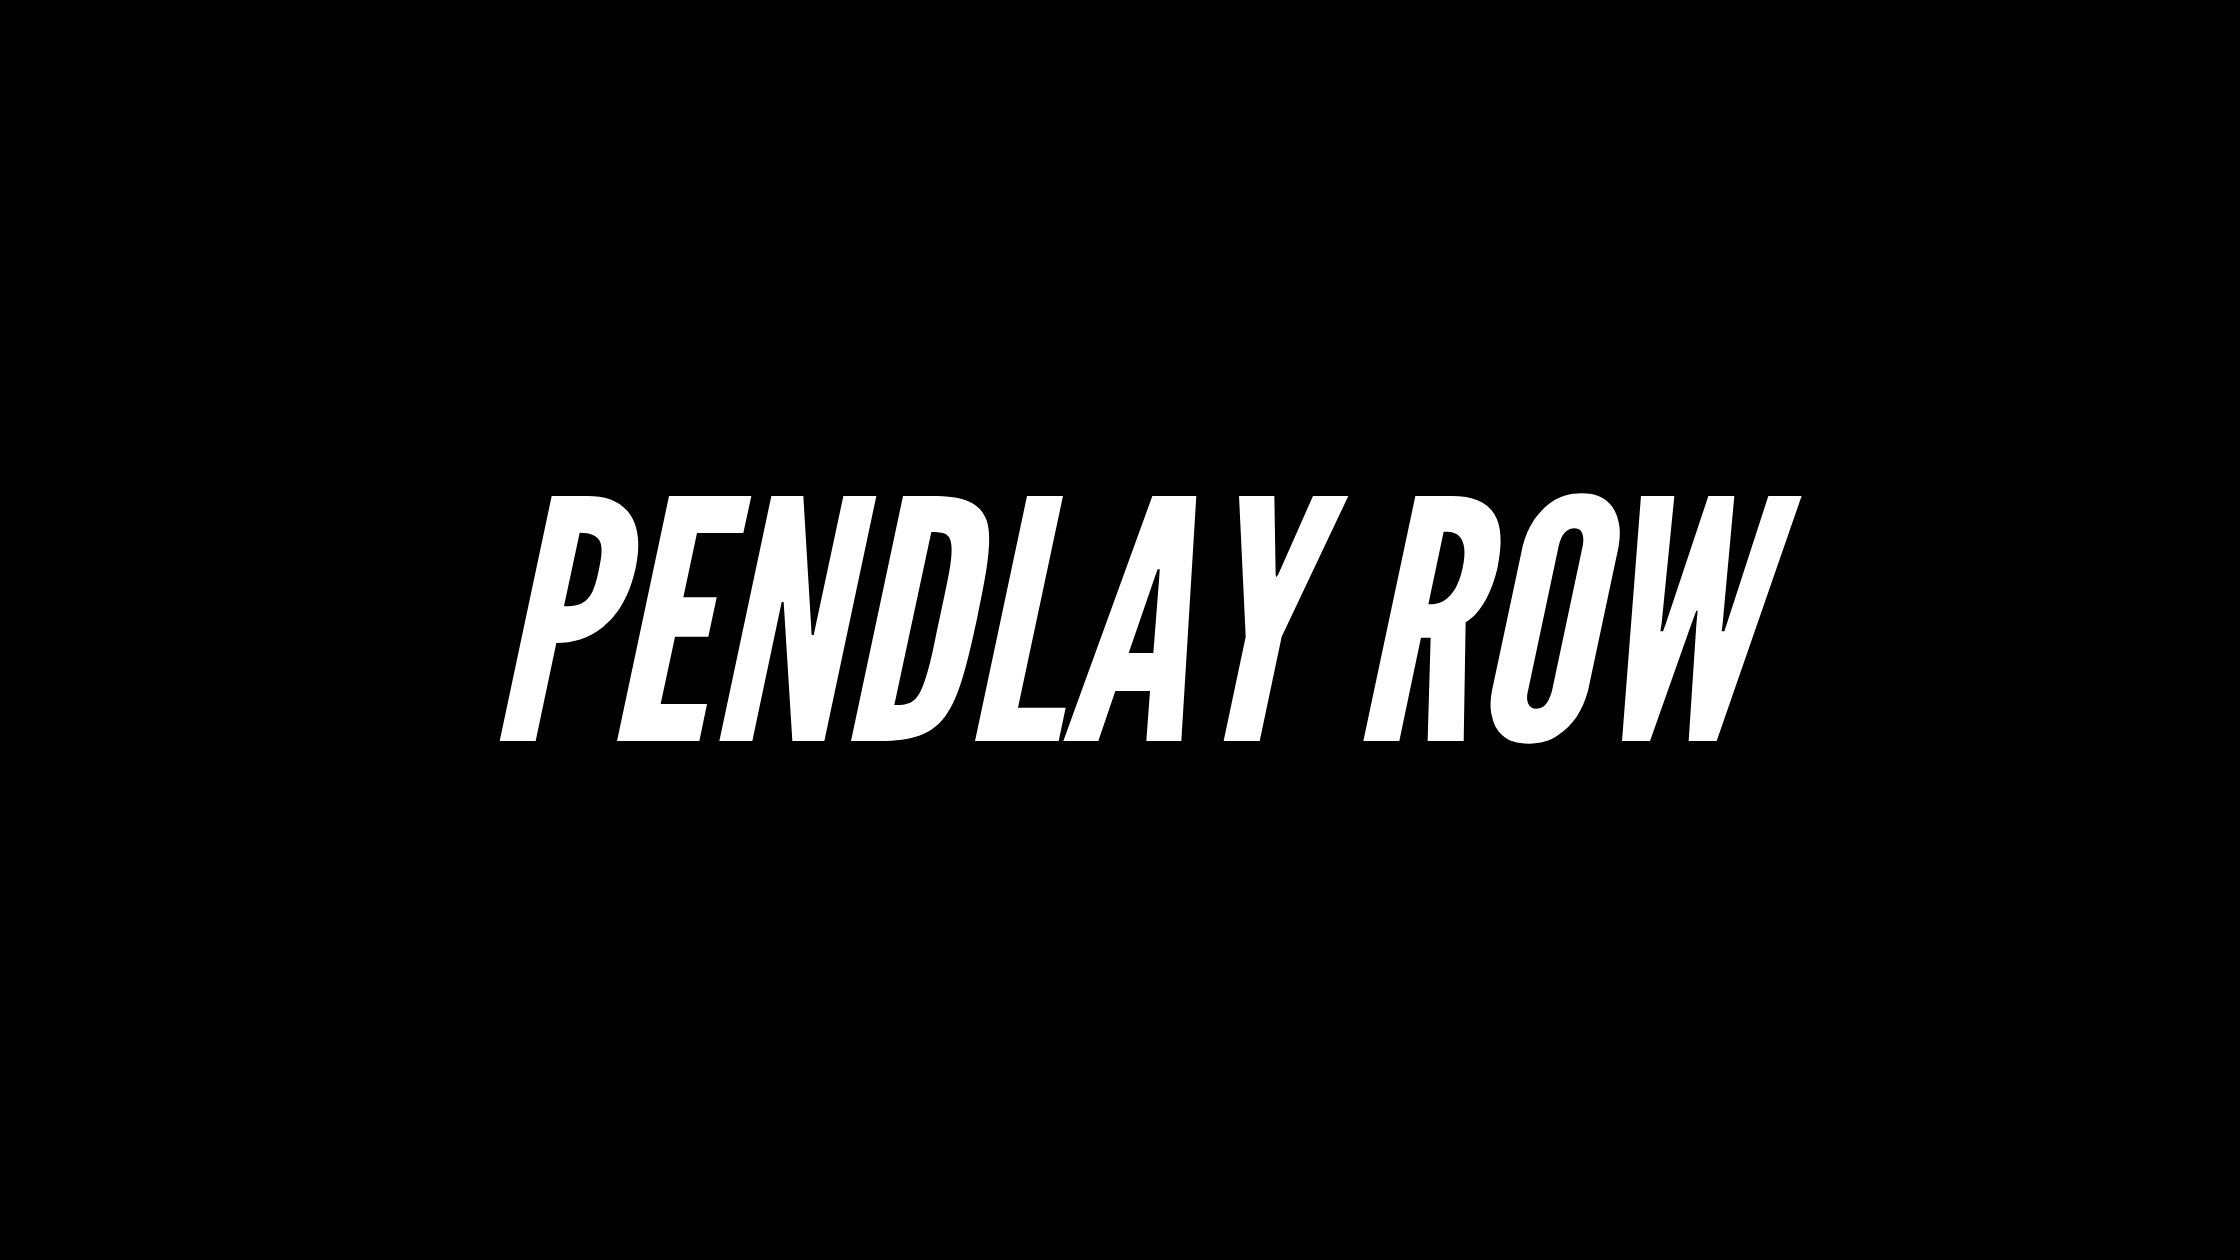 pendlay-row